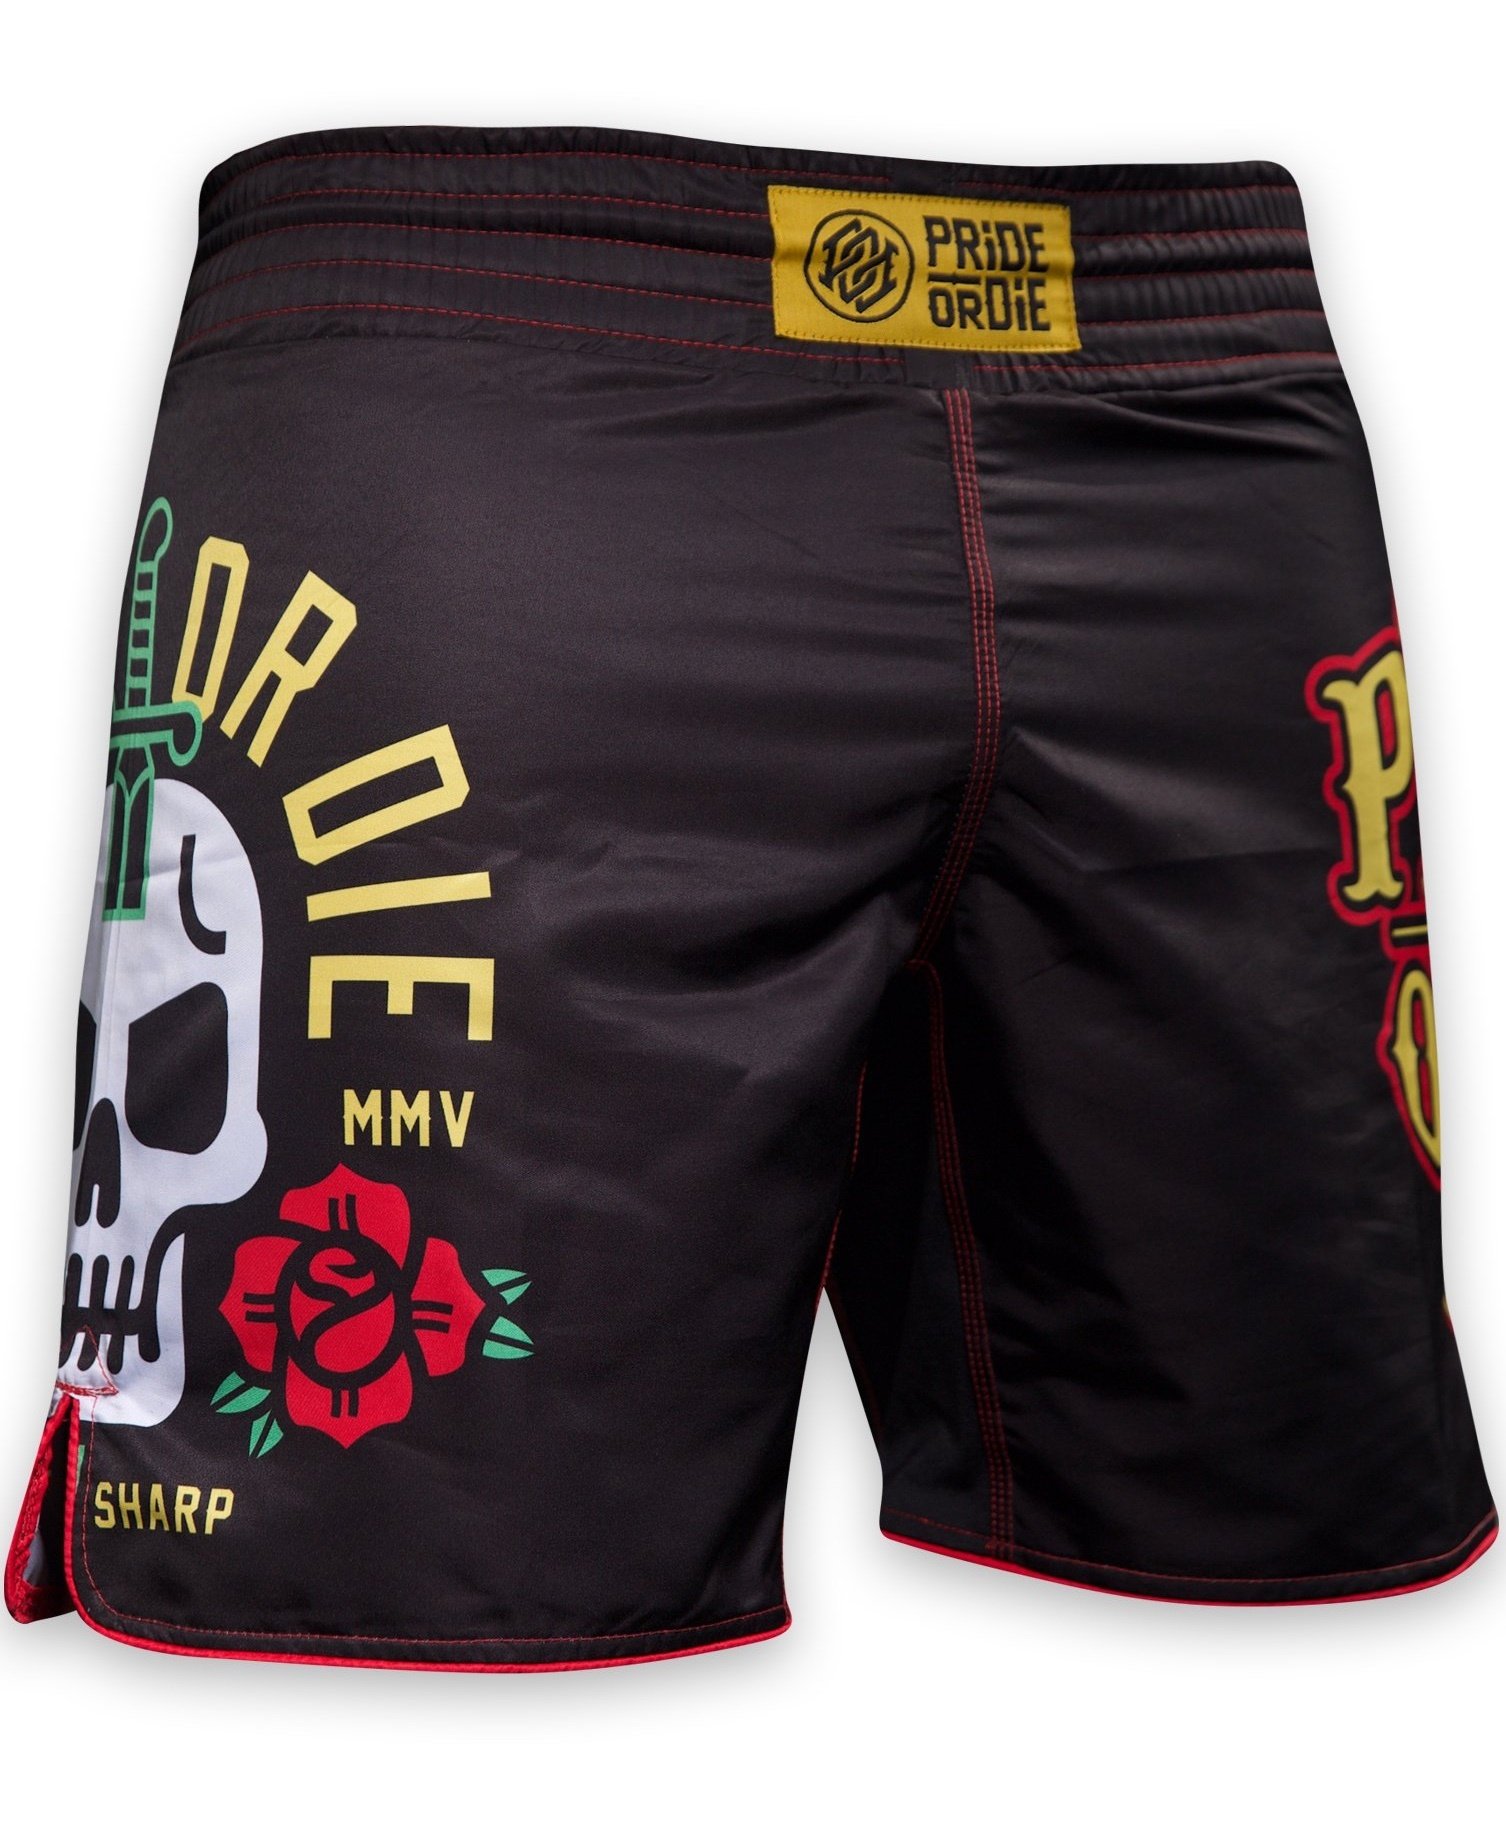 Shop MMA & Kickboxing Shorts